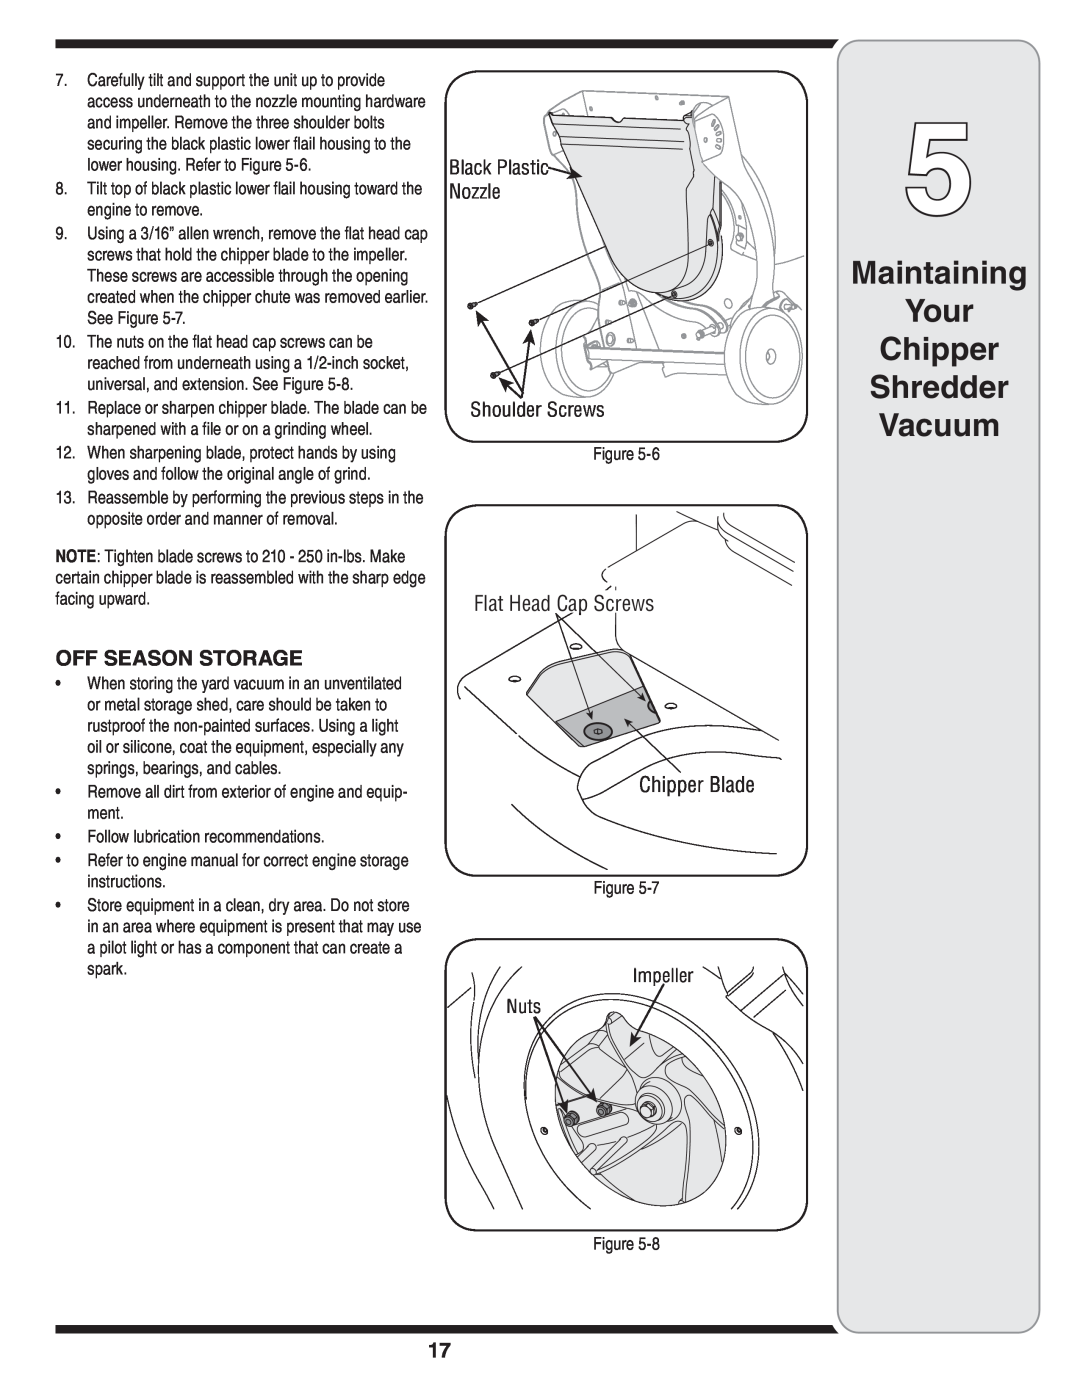 MTD Series 020 warranty Maintaining Your Chipper Shredder Vacuum, Off Season Storage, Flat Head Cap Screws Chipper Blade 